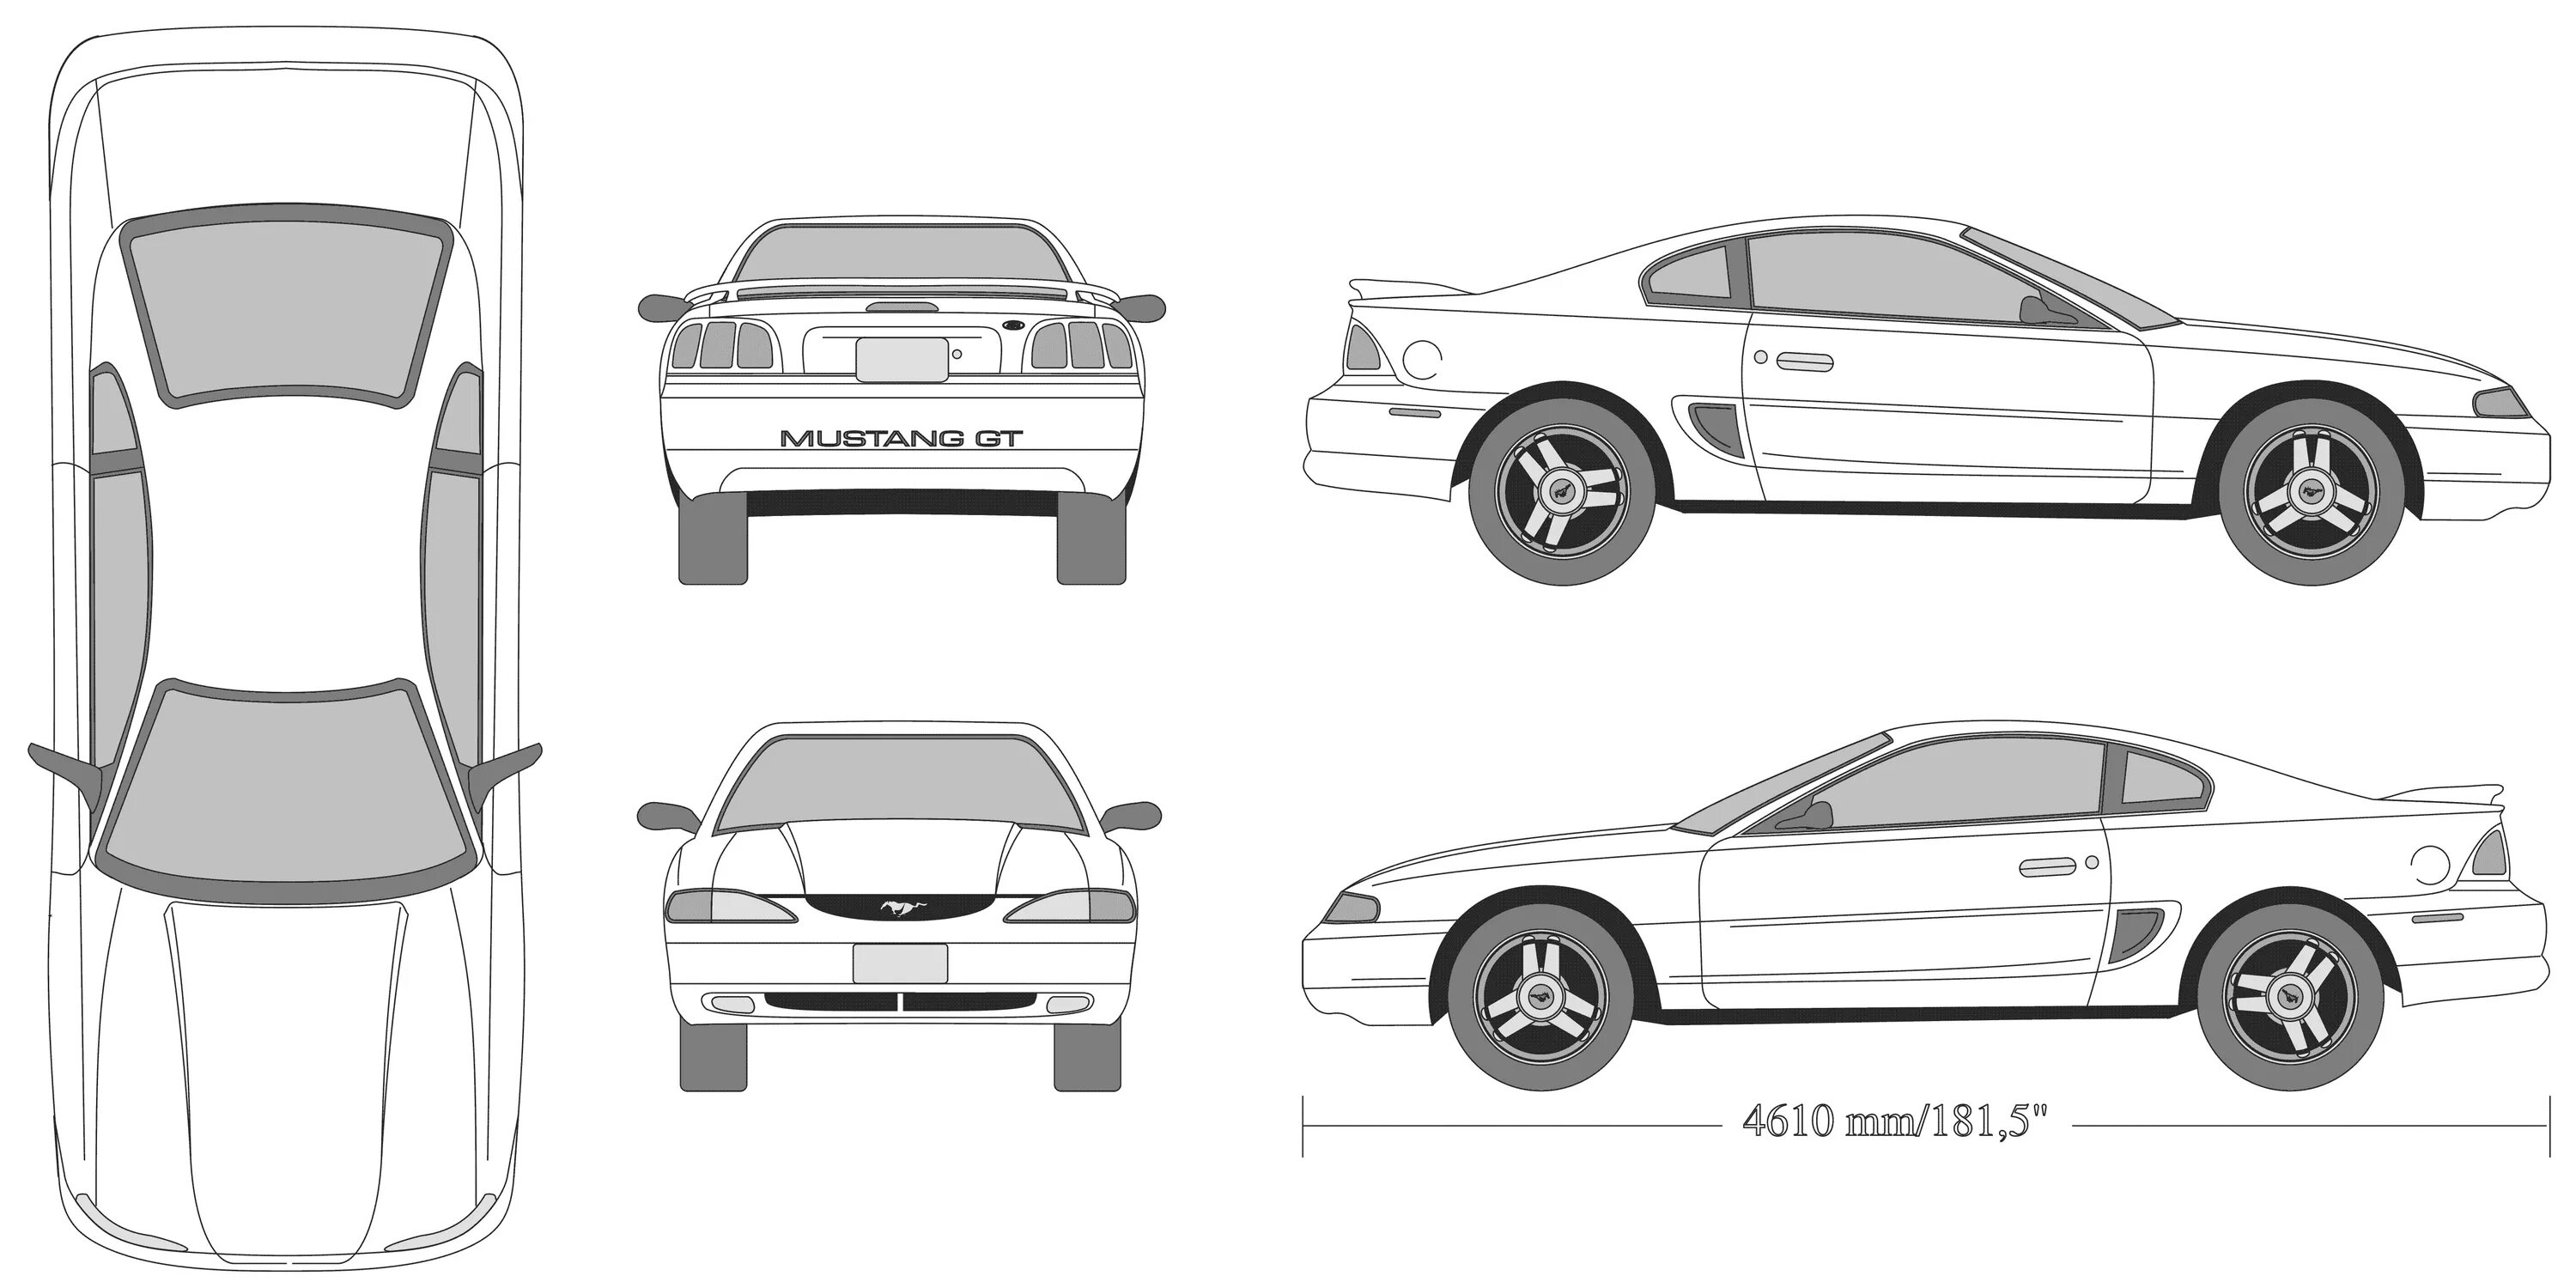 Референс машины. Форд Мустанг 2005 чертежи. Ford Mustang чертеж. Ford Mustang 2005 Blueprint. Ford Mustang купе 2017 чертеж.